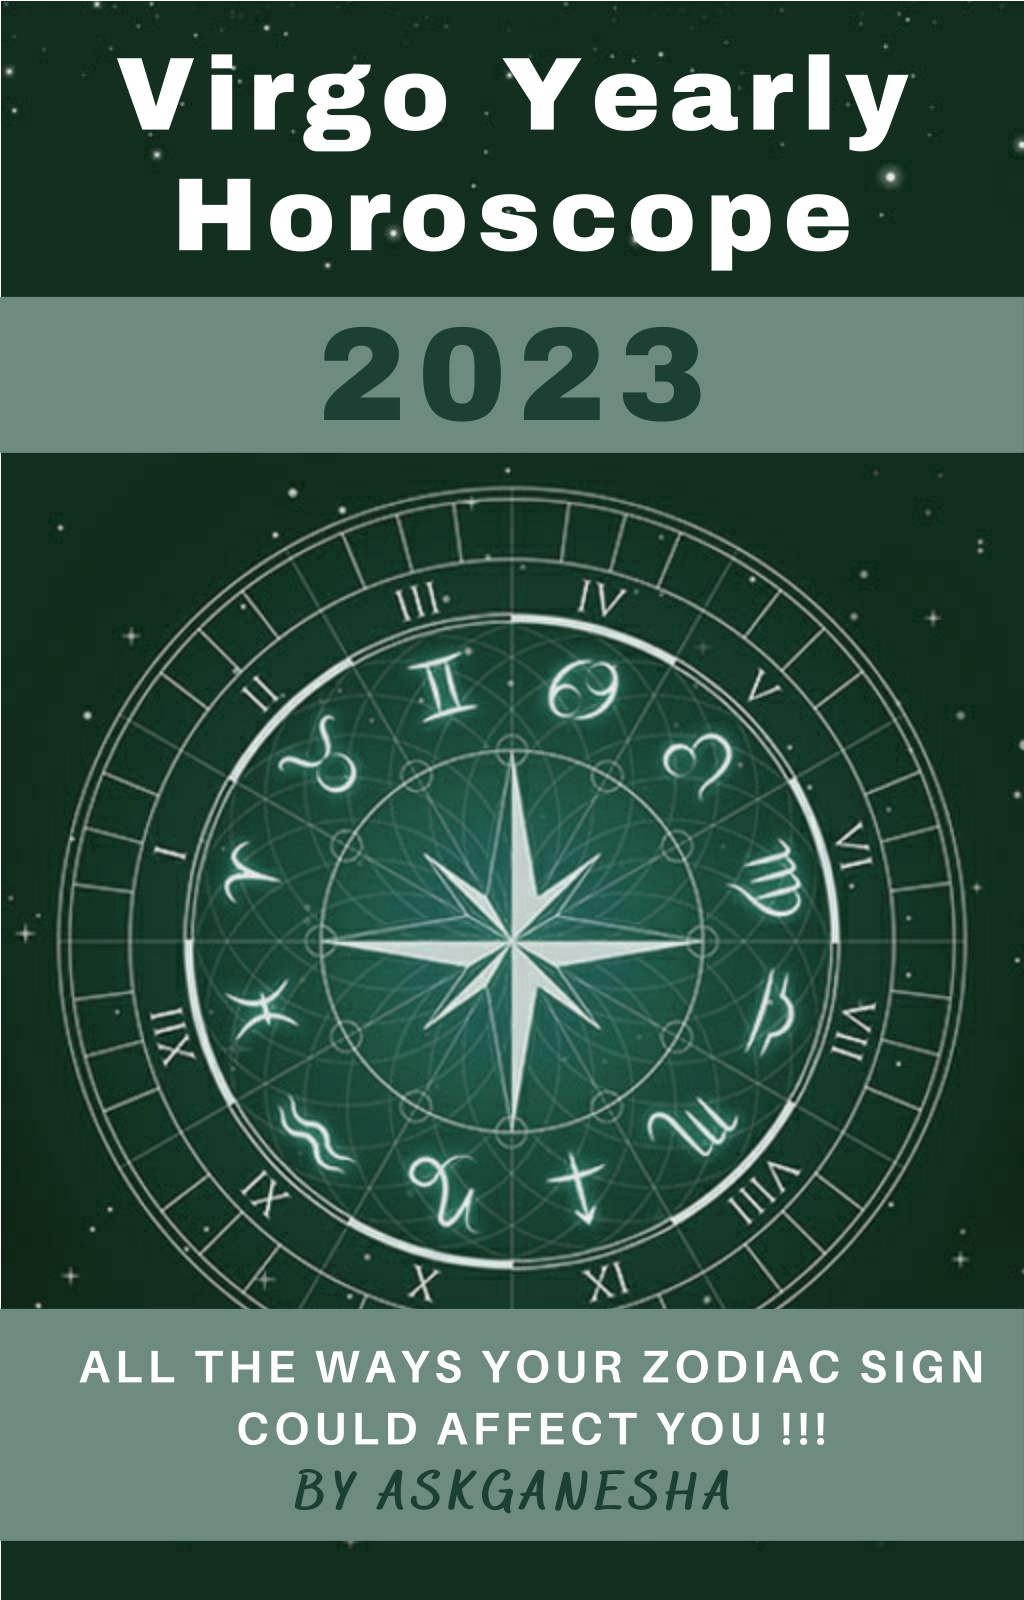 PPT Virgo Yearly Horoscope 2023 PowerPoint Presentation, free